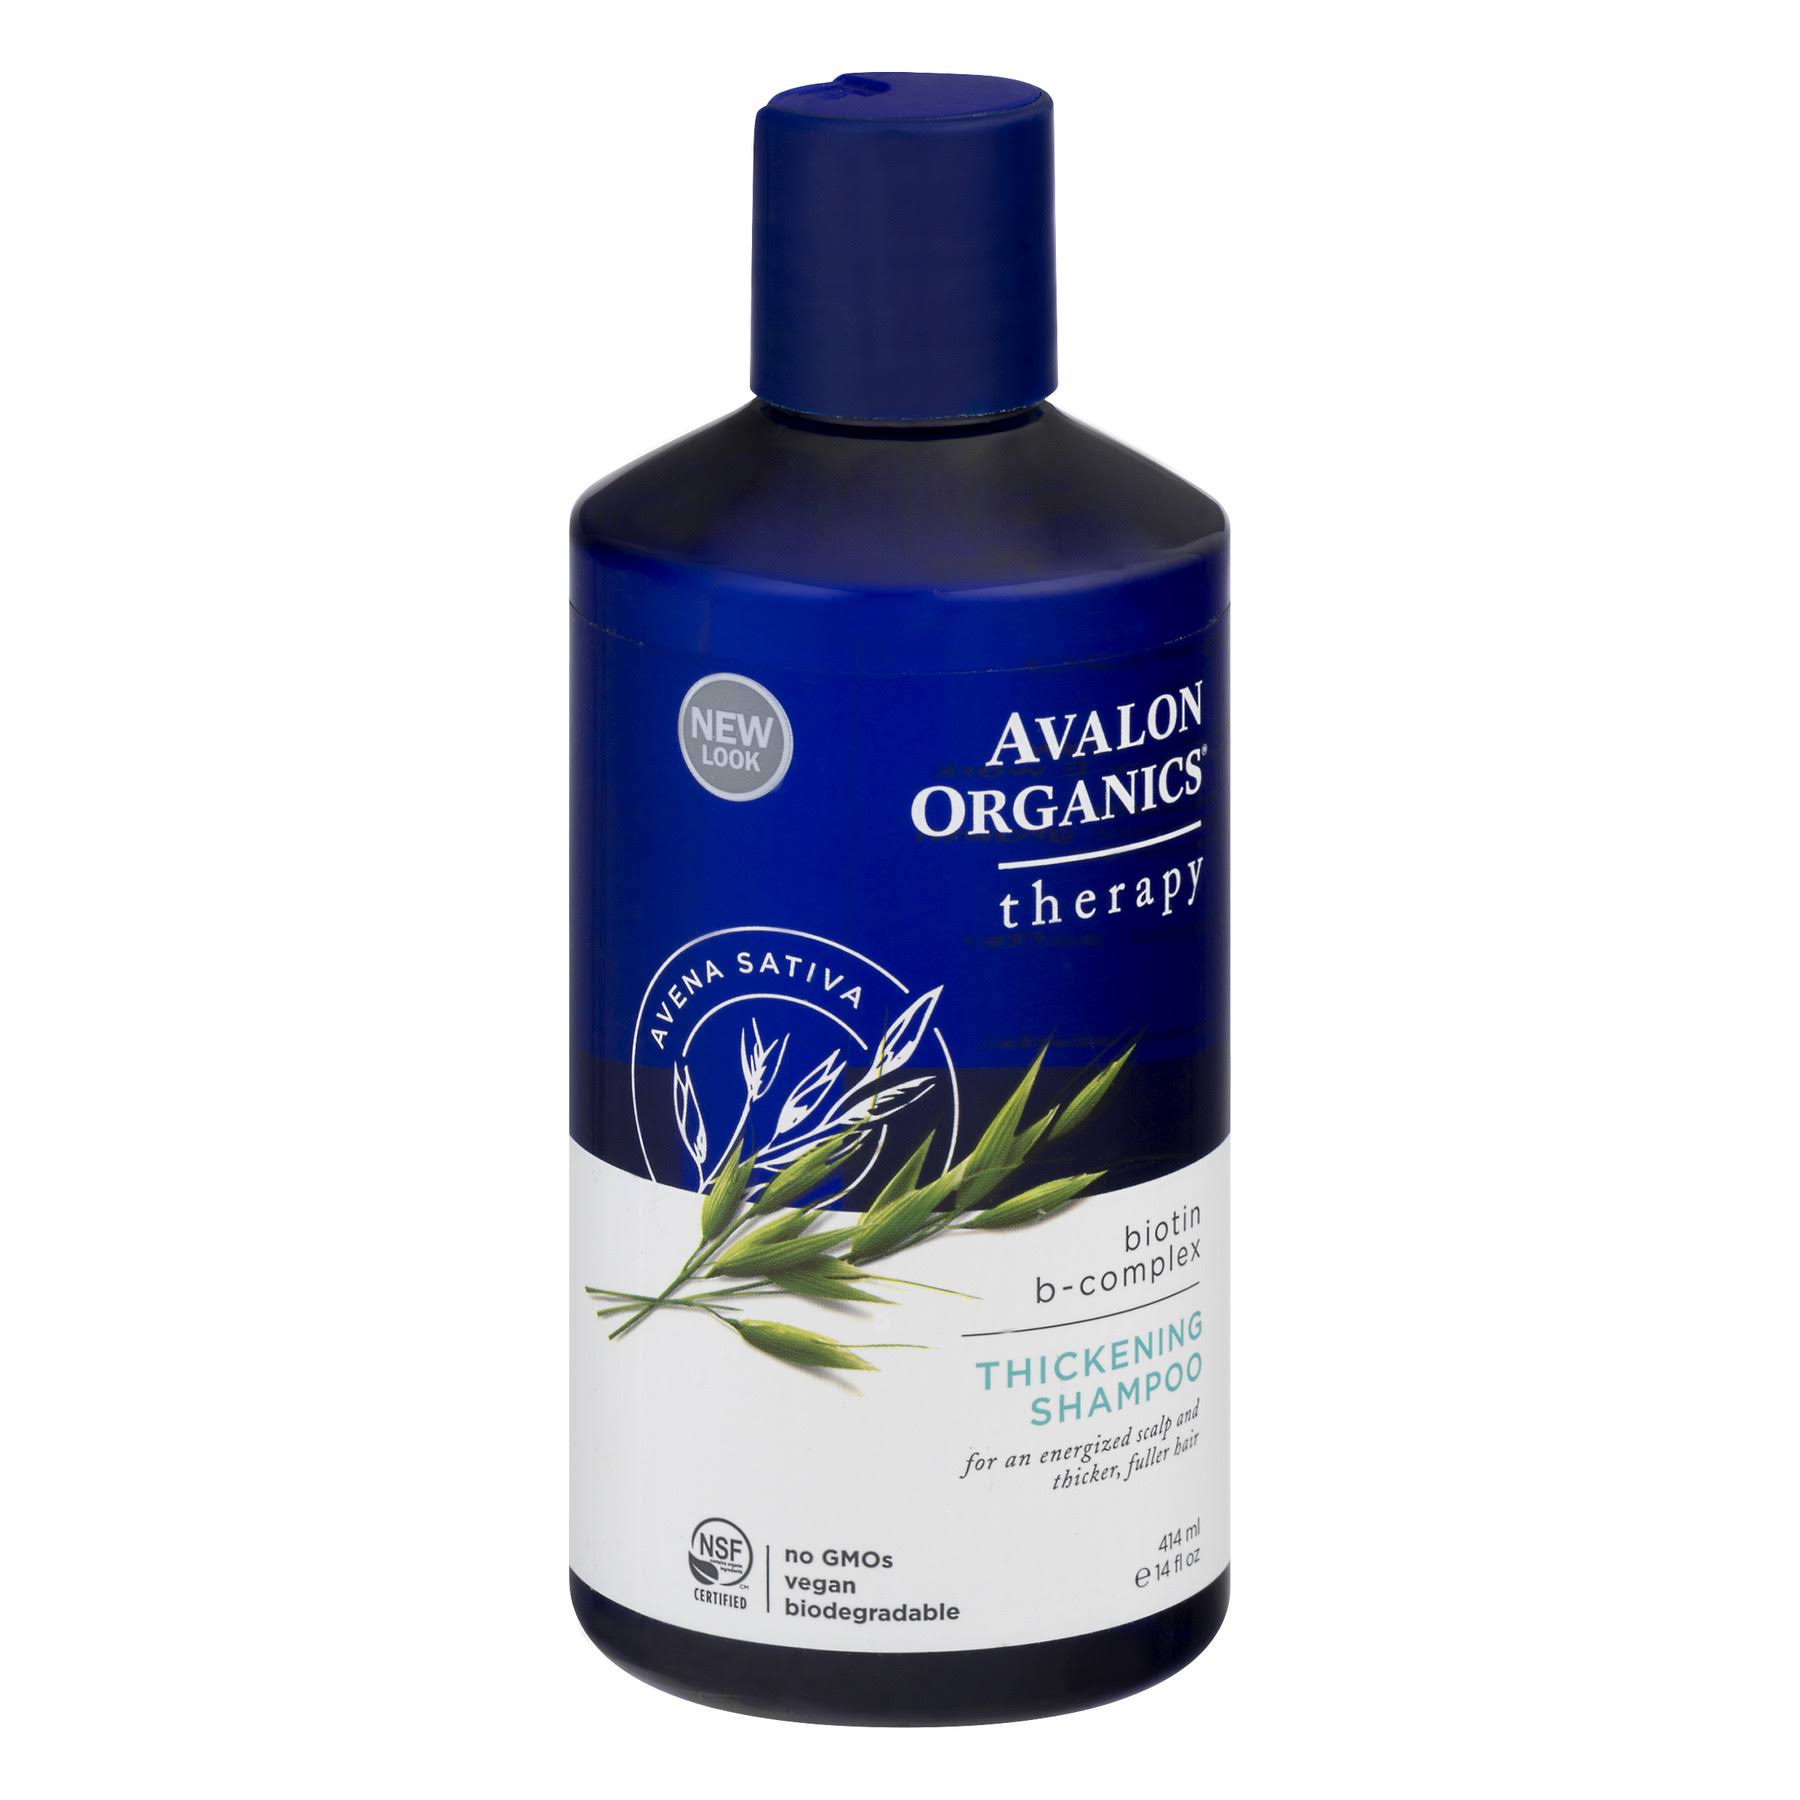 Avalon Organics Therapy Biotin B-Complex Thickening Shampoo - 414ml